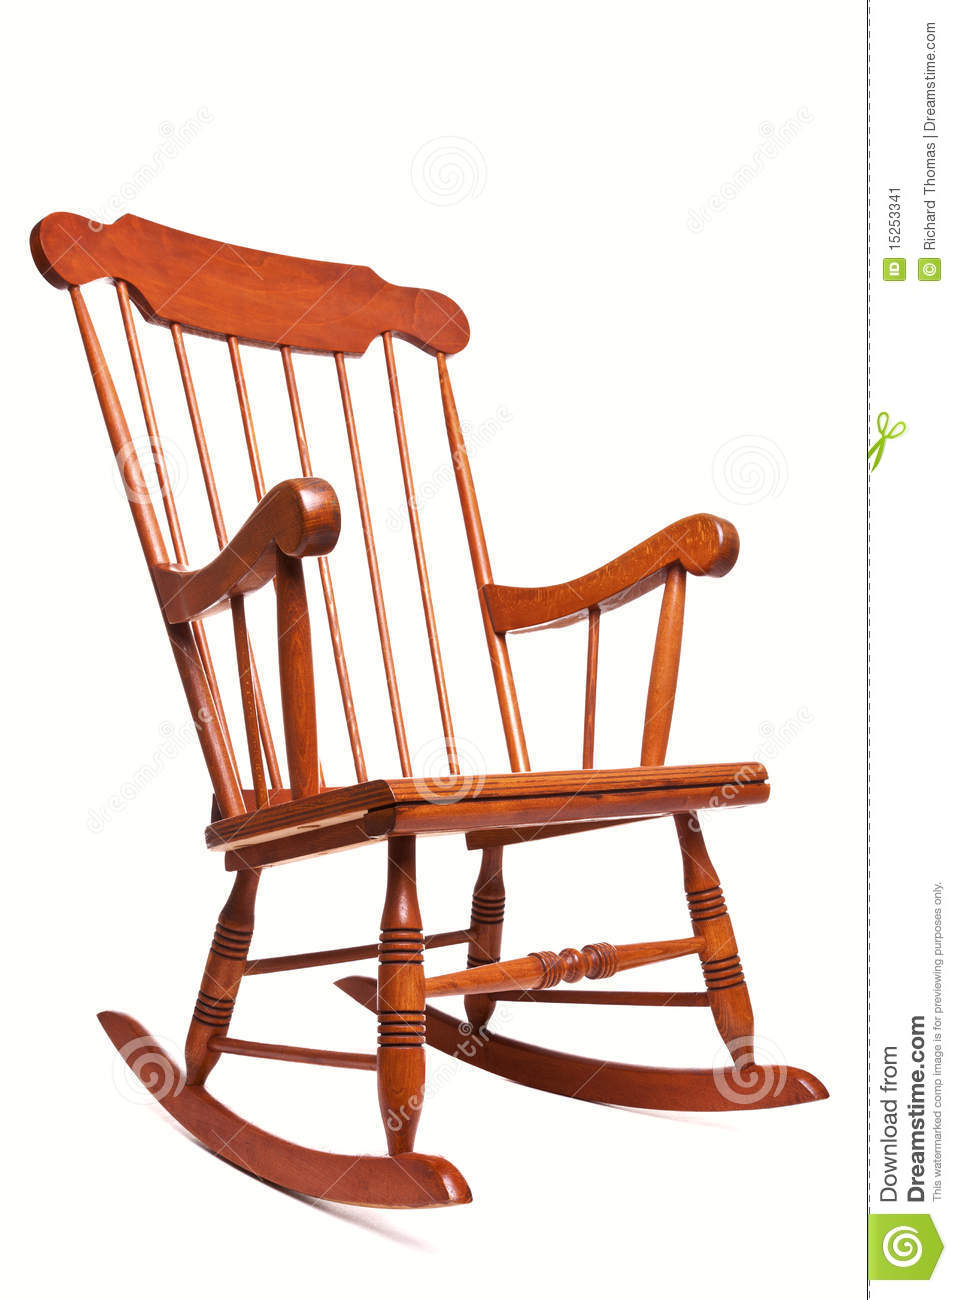 ... ClipartFest rocking chair - Rocking Chair Clip Art